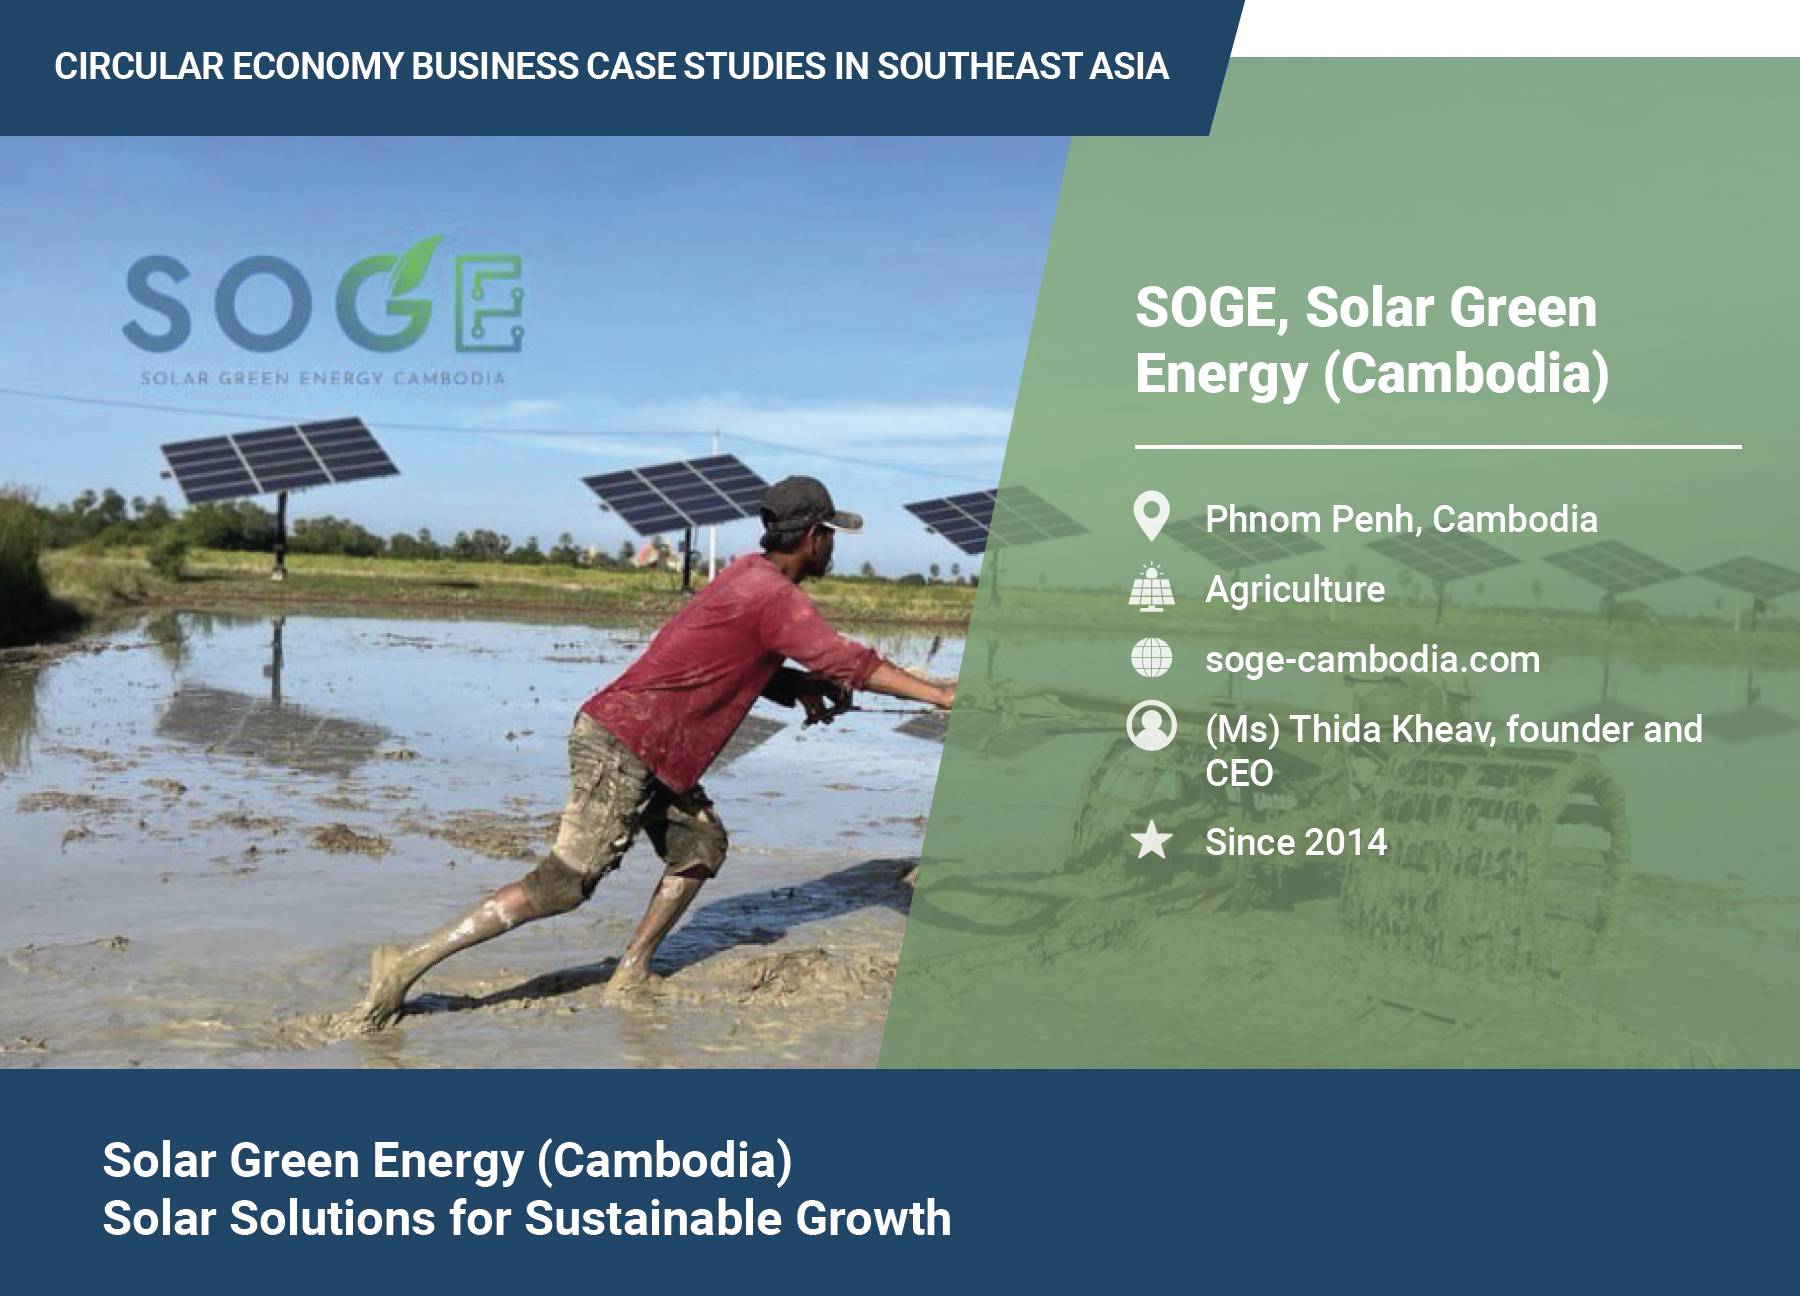 SOGE, Solar Green Energy (Cambodia)